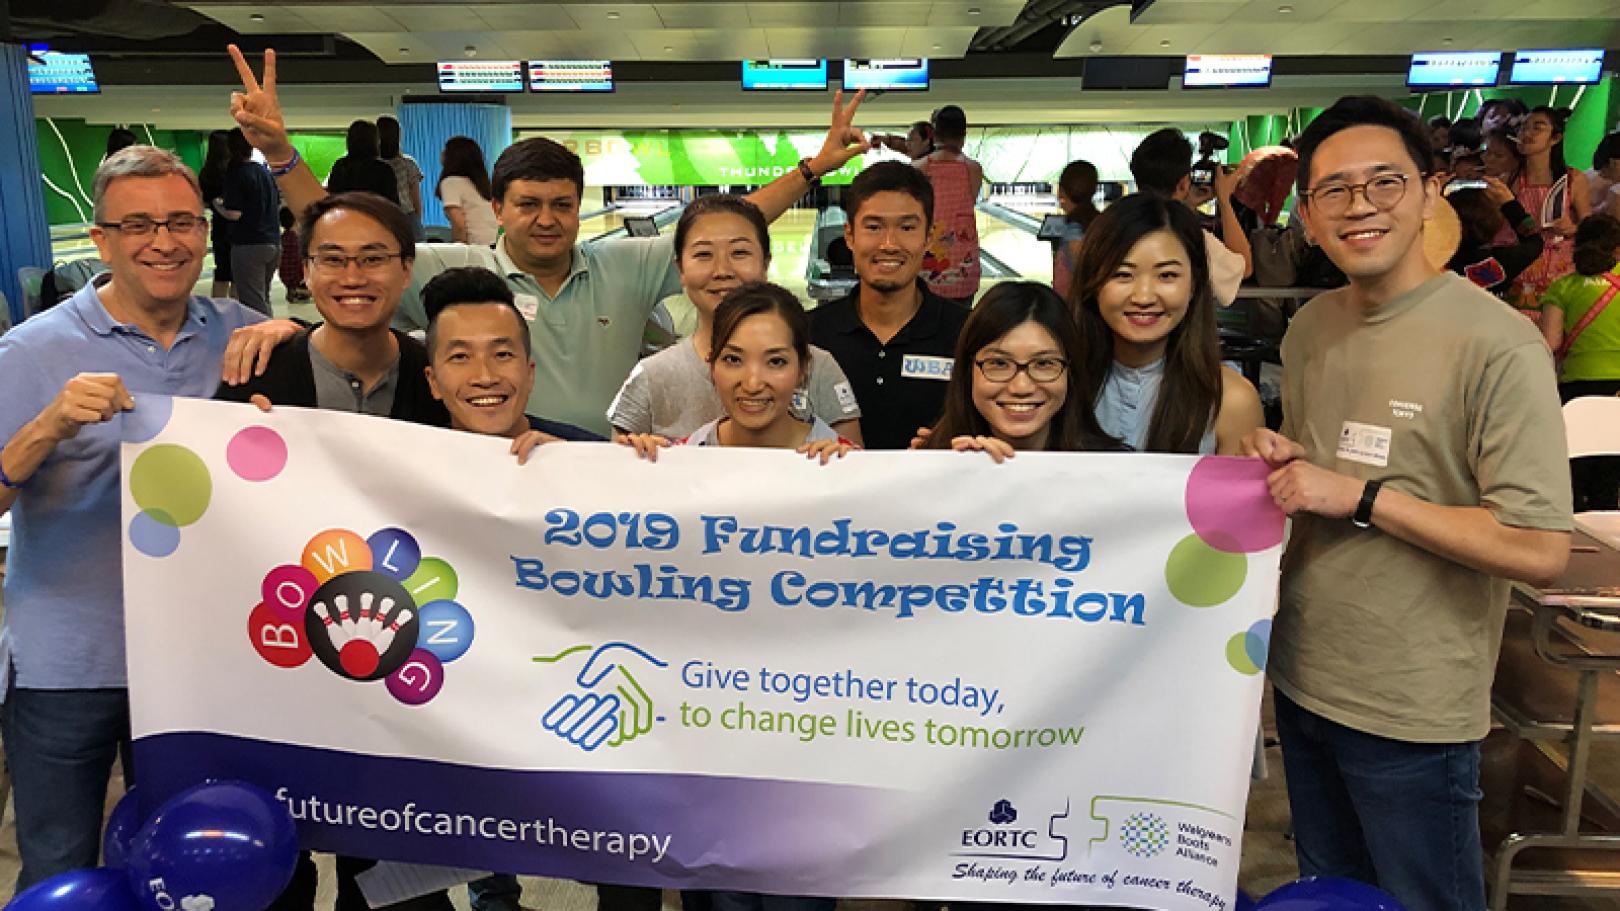 The Hong Kong Global Brands Asia Operation bowling tournament